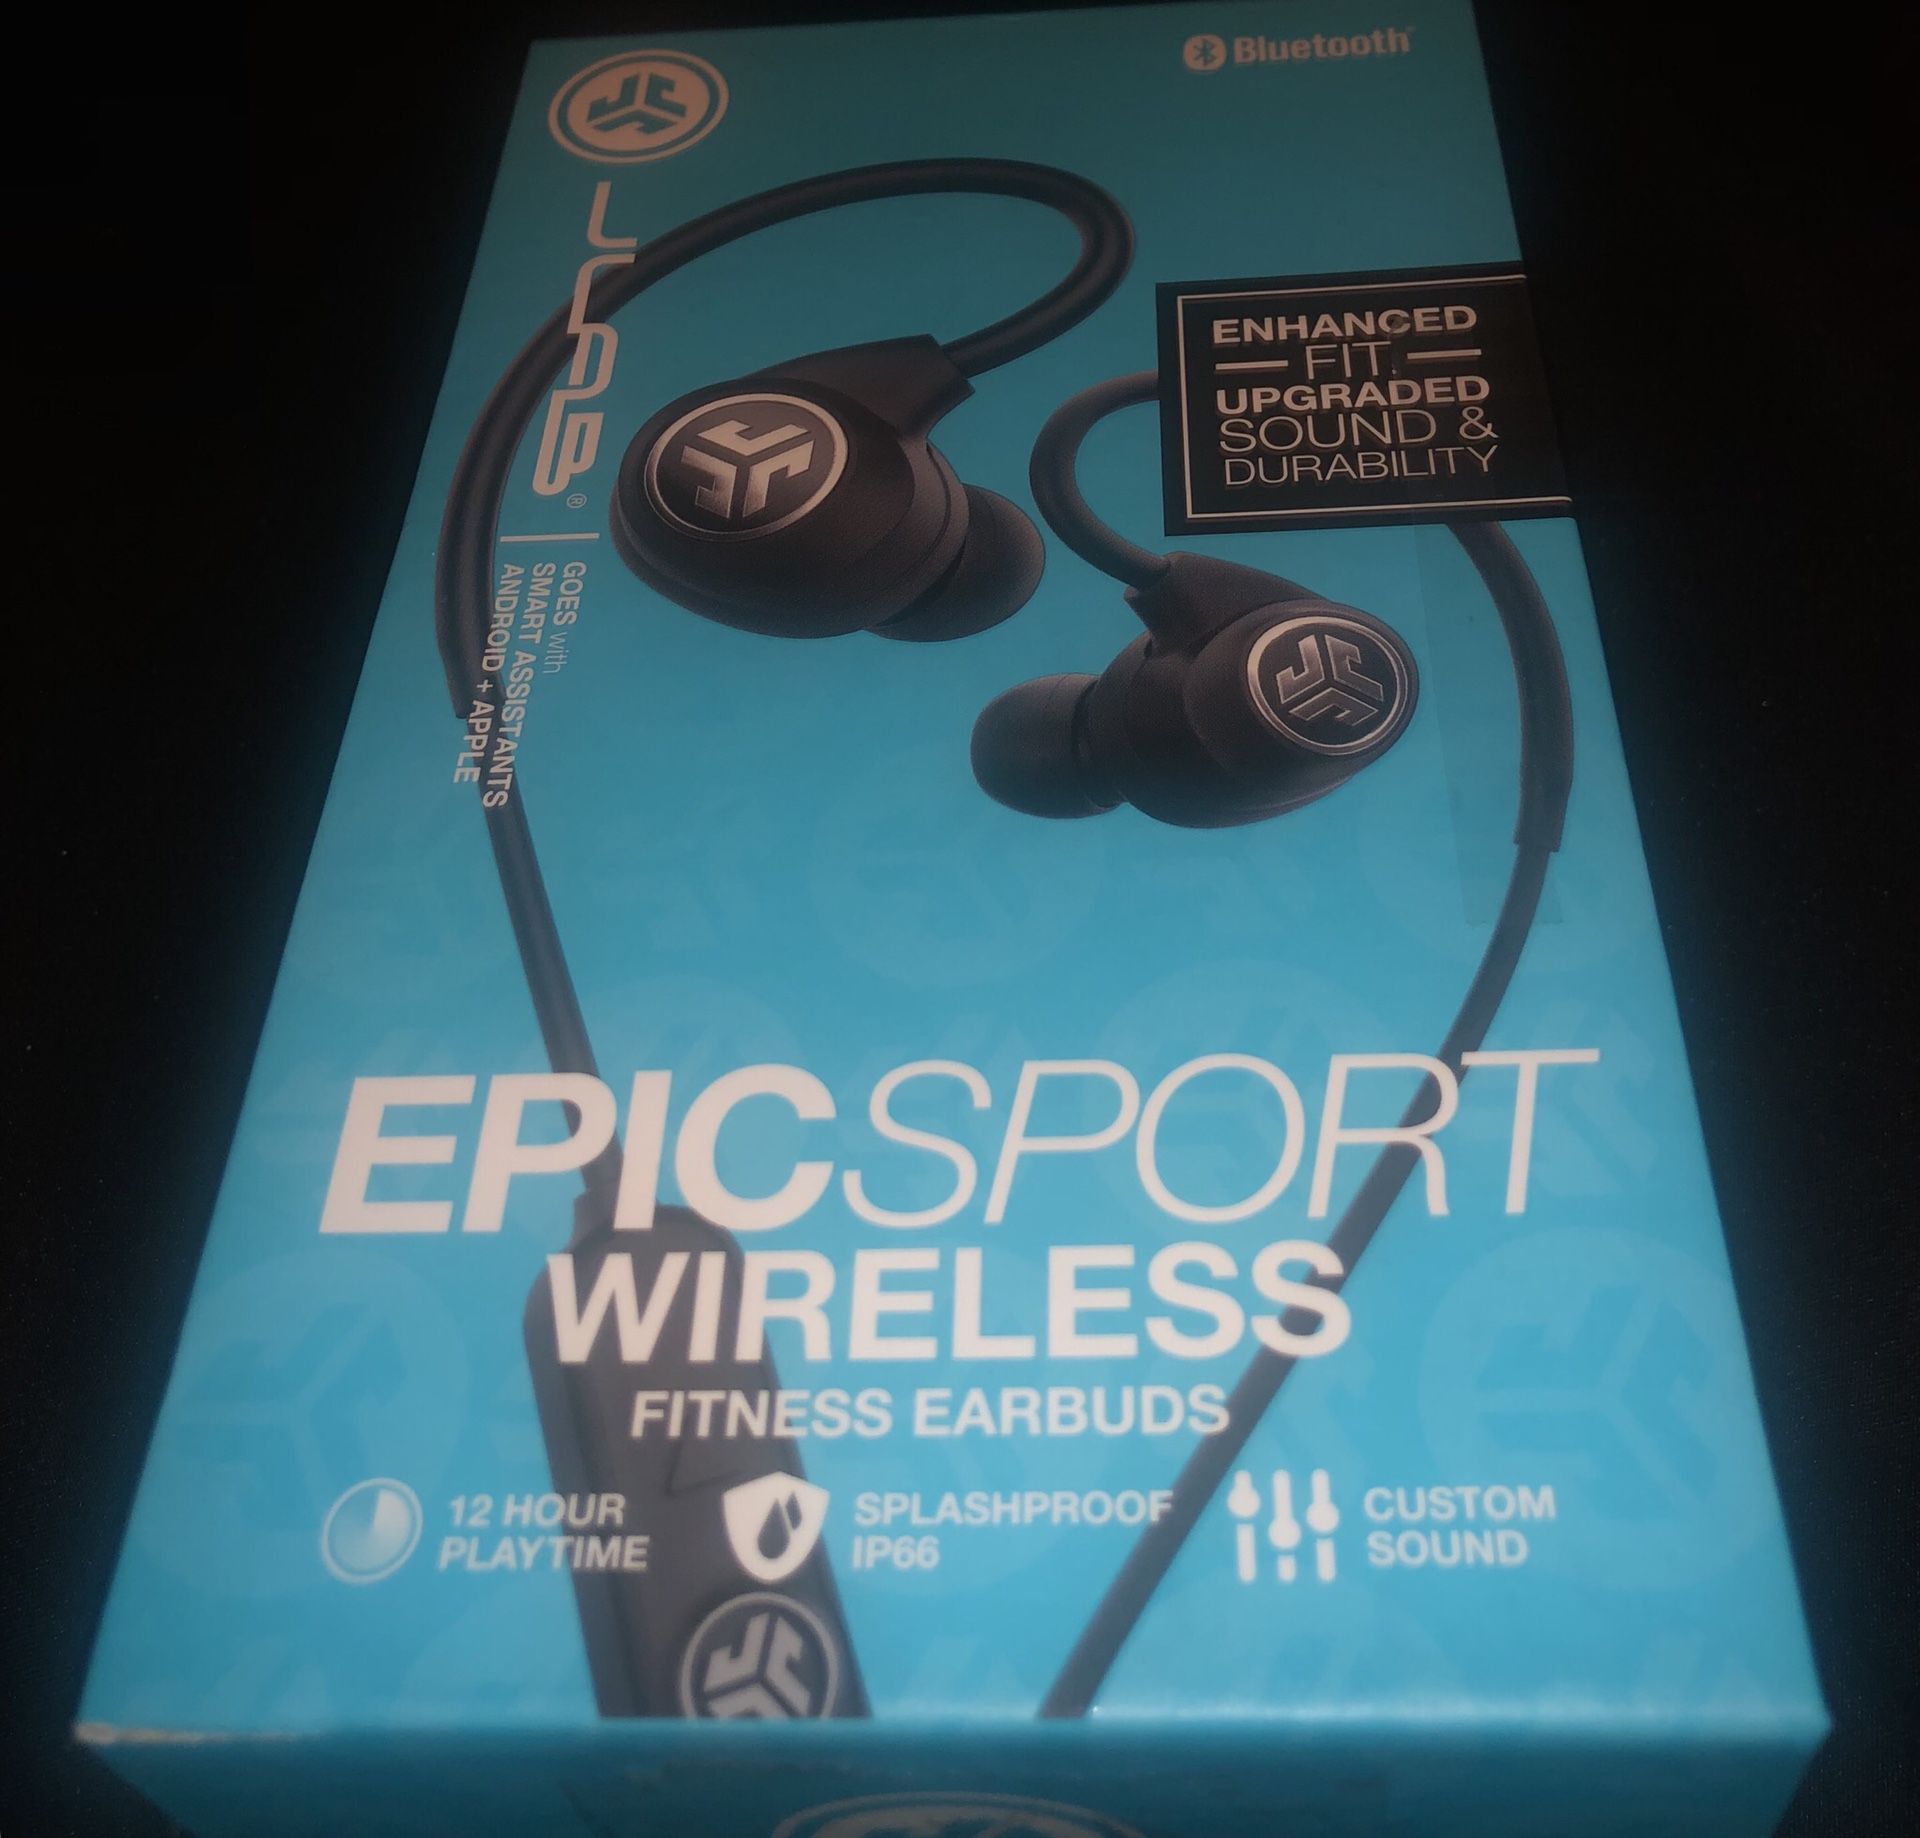 Jlab EpicSport wireless earbuds